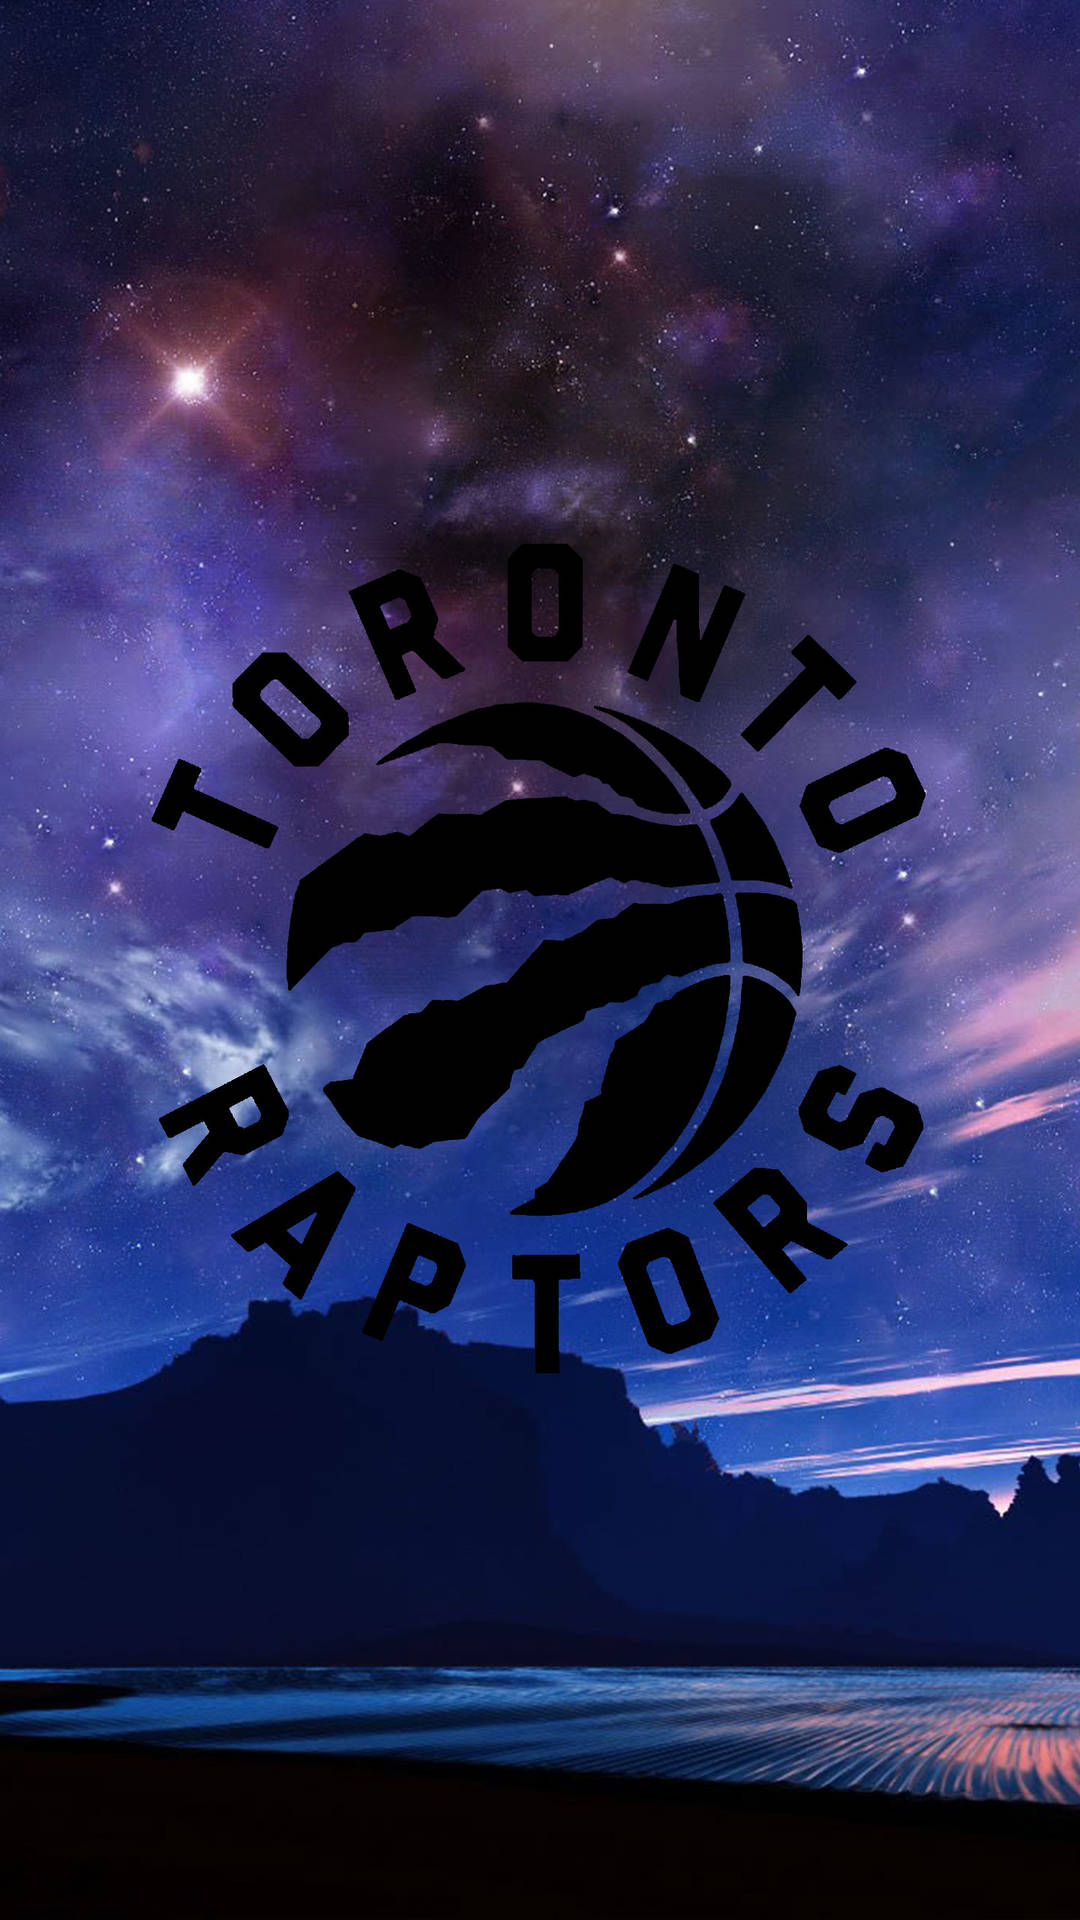 Toronto Raptors Portrait Image Wallpaper